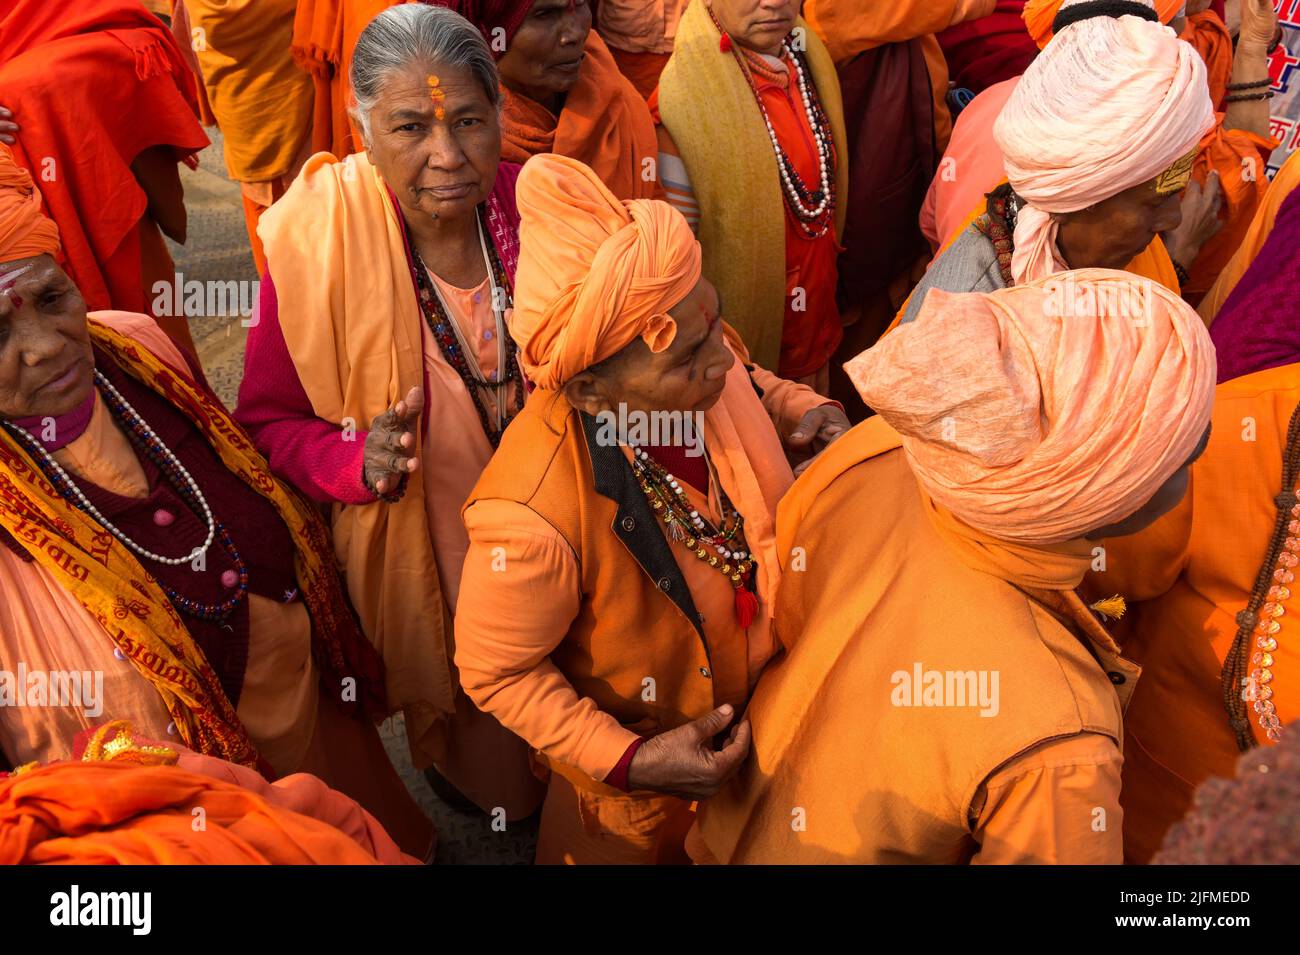 En Sadhvi saree rojo naranja en Allahabad Kumbh Mela, la reunión religiosa más grande del mundo, Uttar Pradesh, India Foto de stock